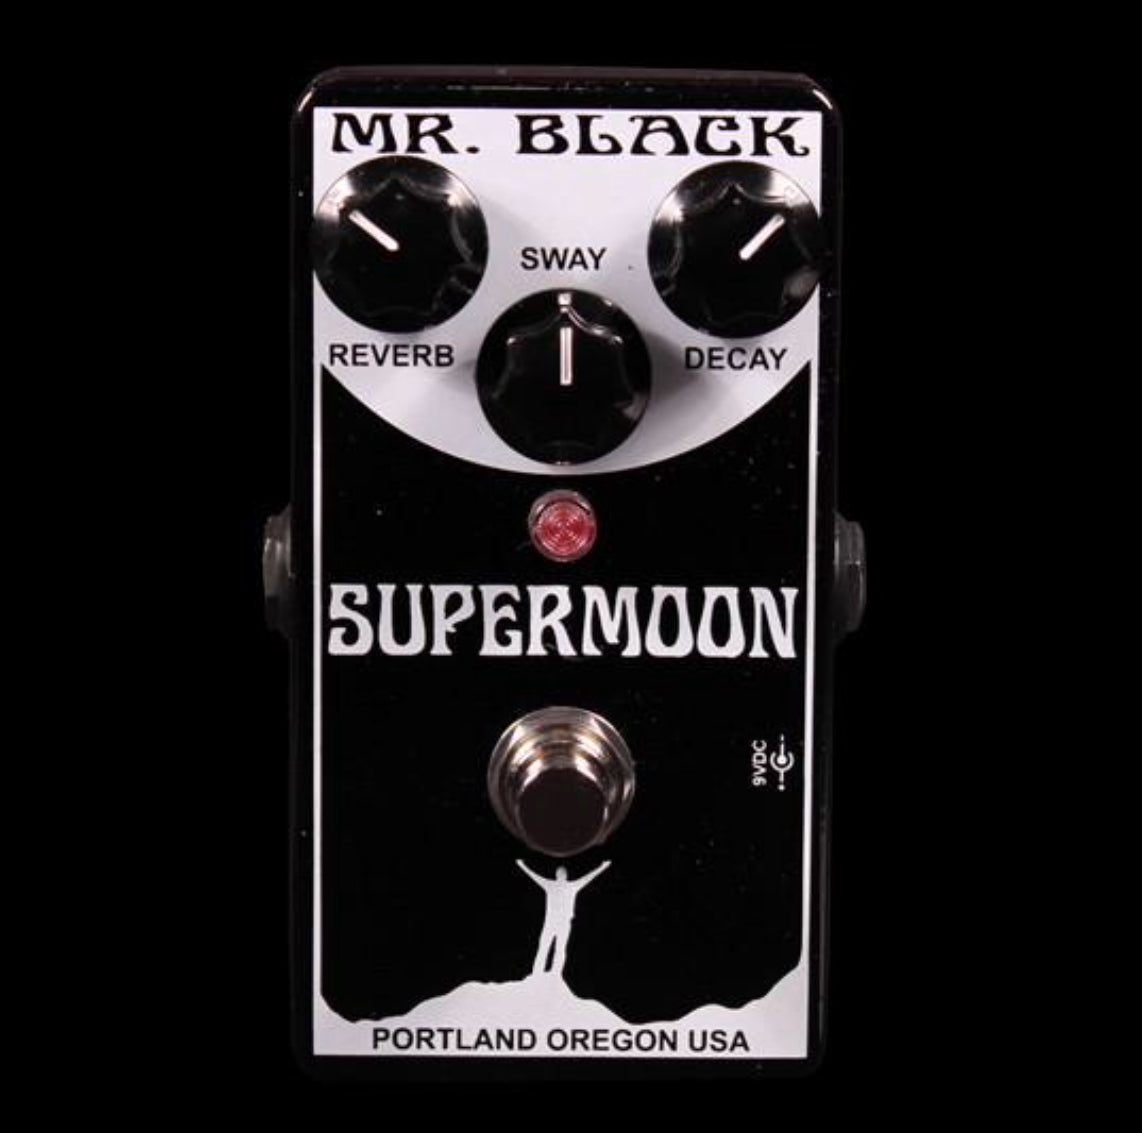 Mr Black Pedals Super Moon Reverb guitar effect.